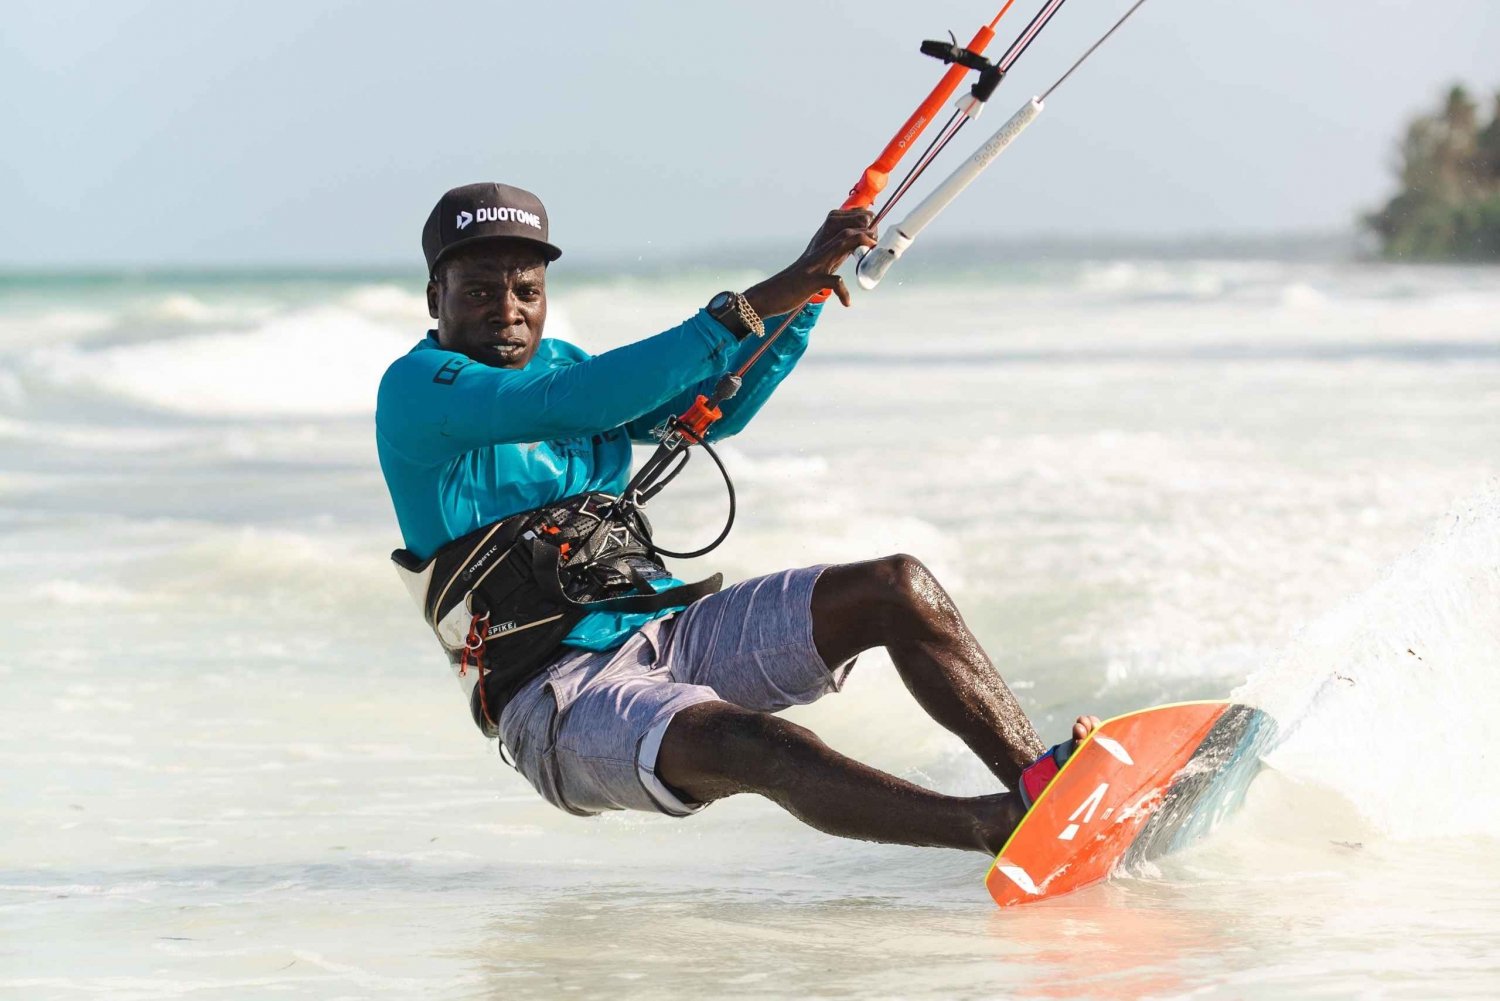 Zanzibar : 1h de location de matériel de kitesurf complet